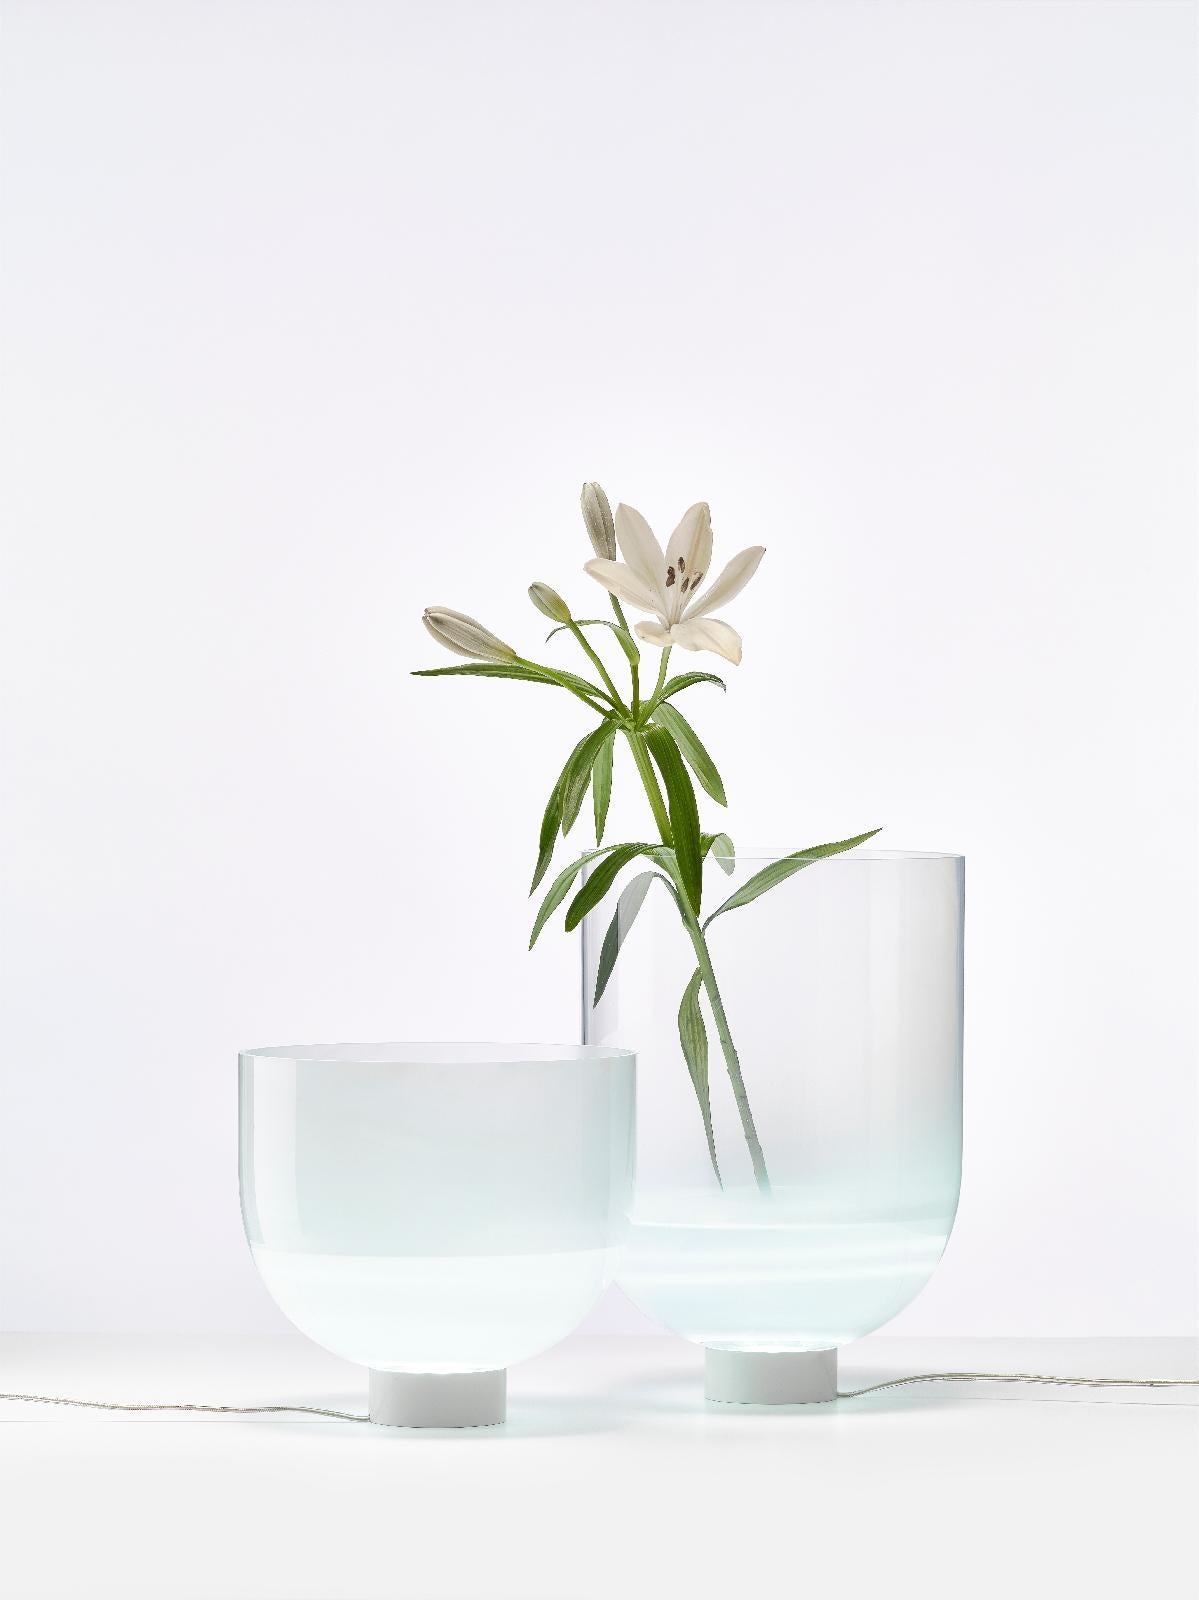 Czech Glowing Vase Table Lamp by Dechem Studio For Sale